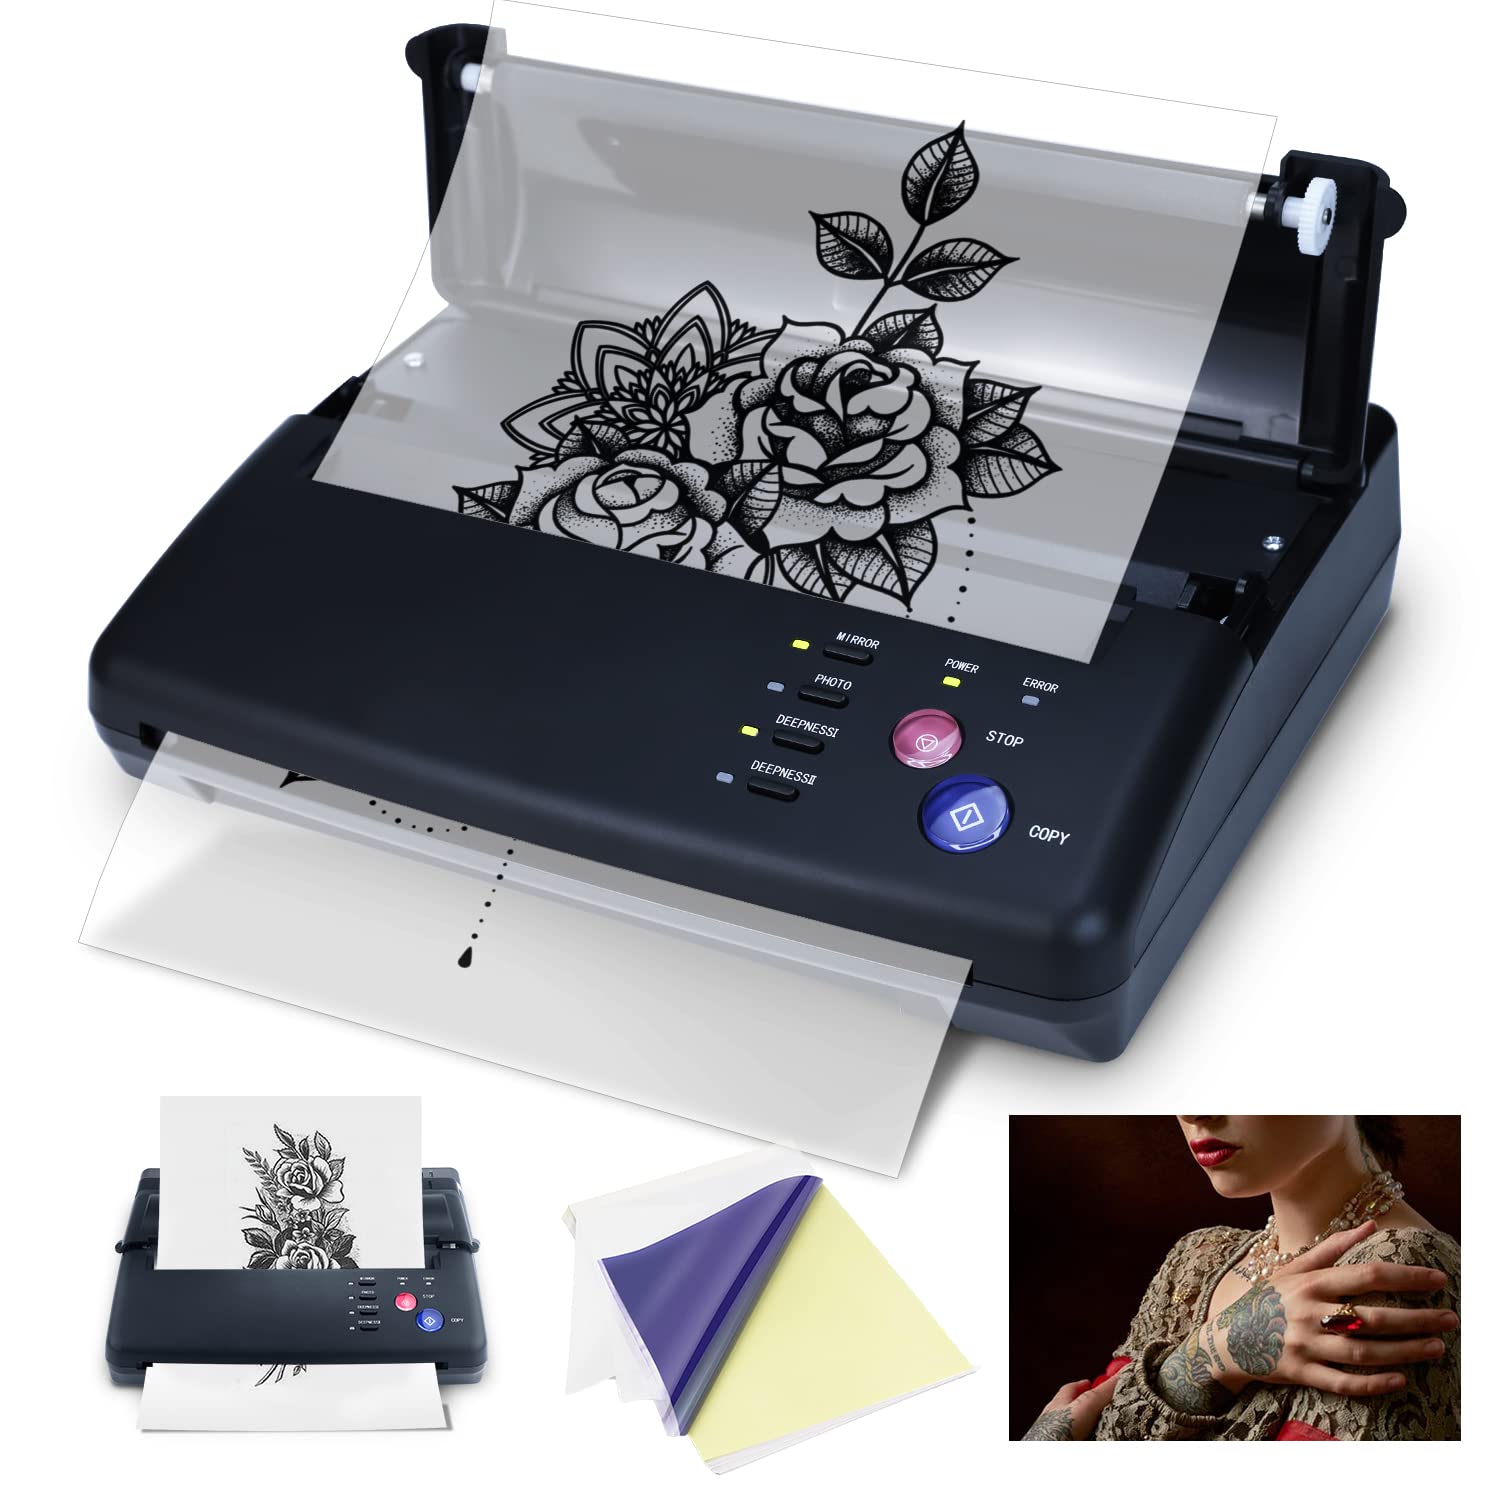 Bcetasy Tattoo Transfer Stencil Printer with Free 20PCS Transfer